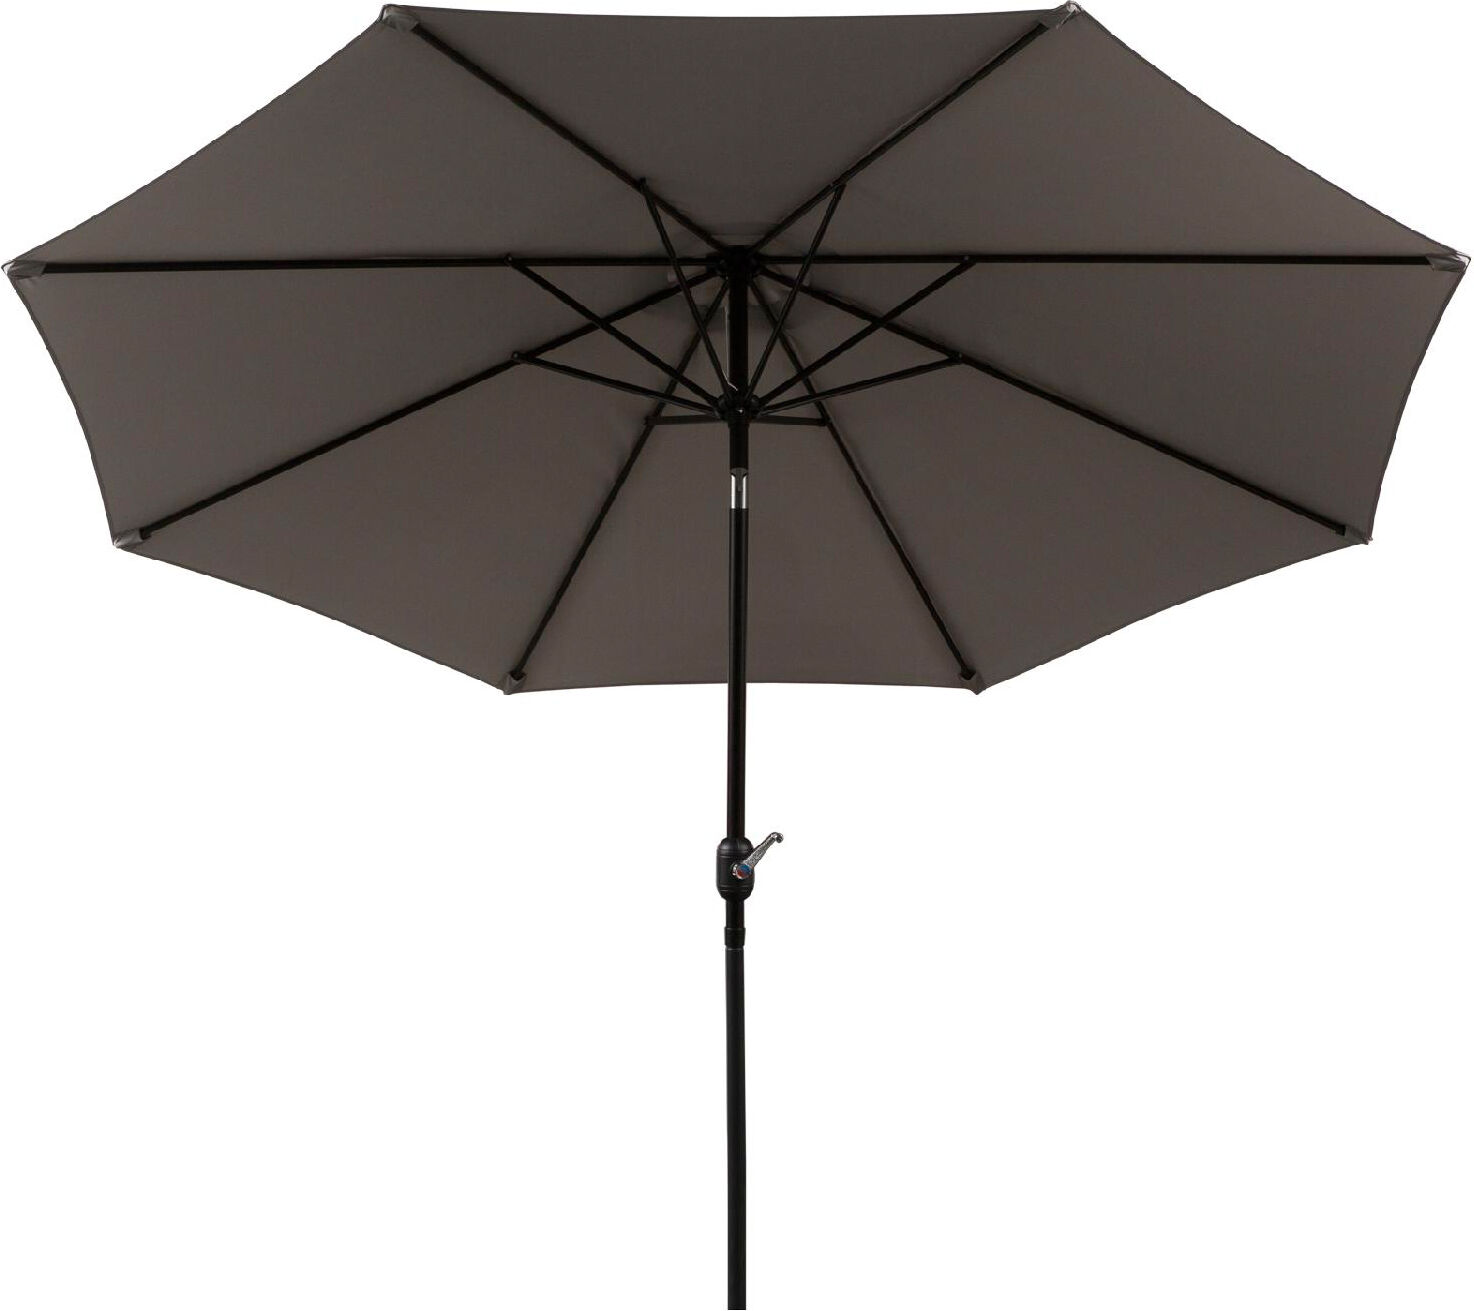 vivagarden 840070gy ombrellone da giardino 3x3 mt in acciaio apertura a manovella colore grigio - 840070gy